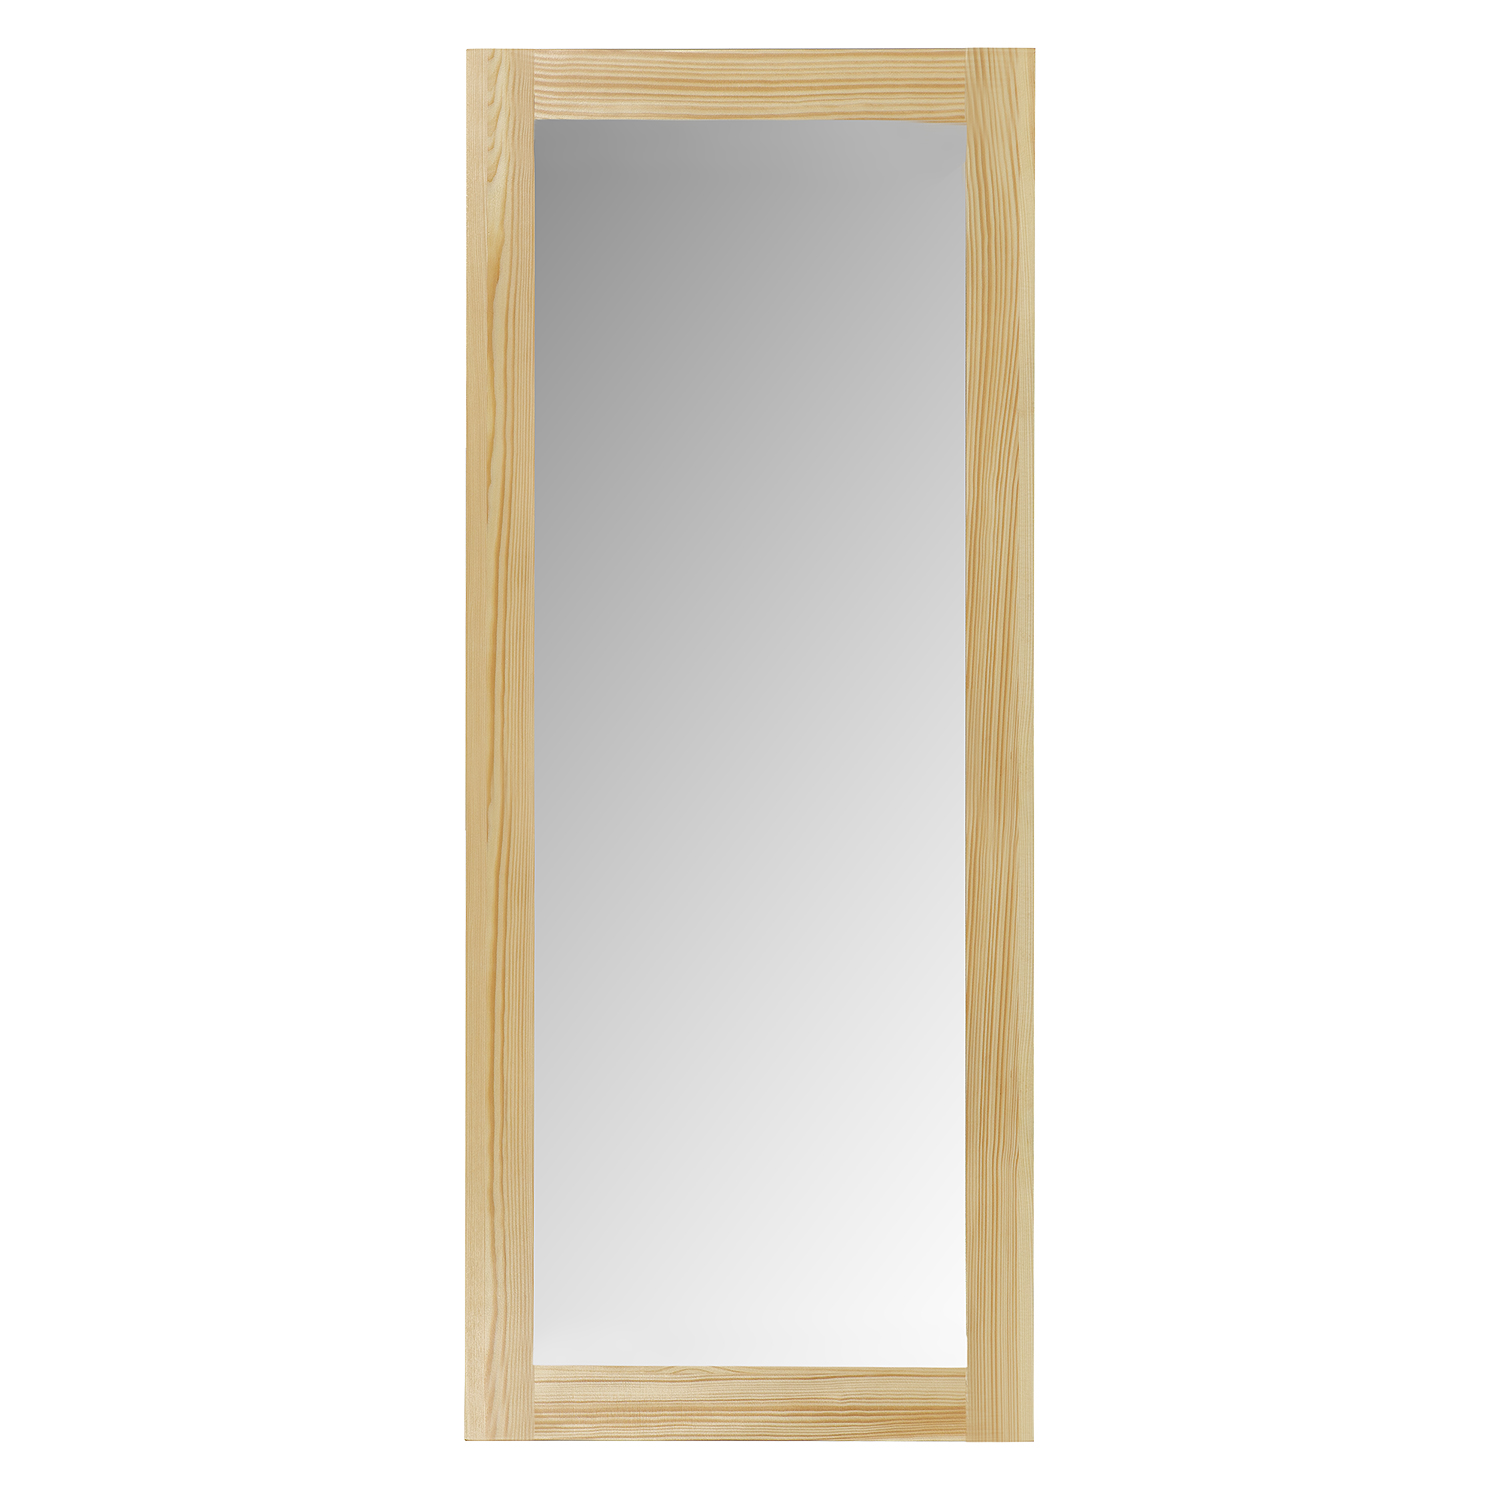 Zrcadlo obdélníkové 50x125cm - Dub